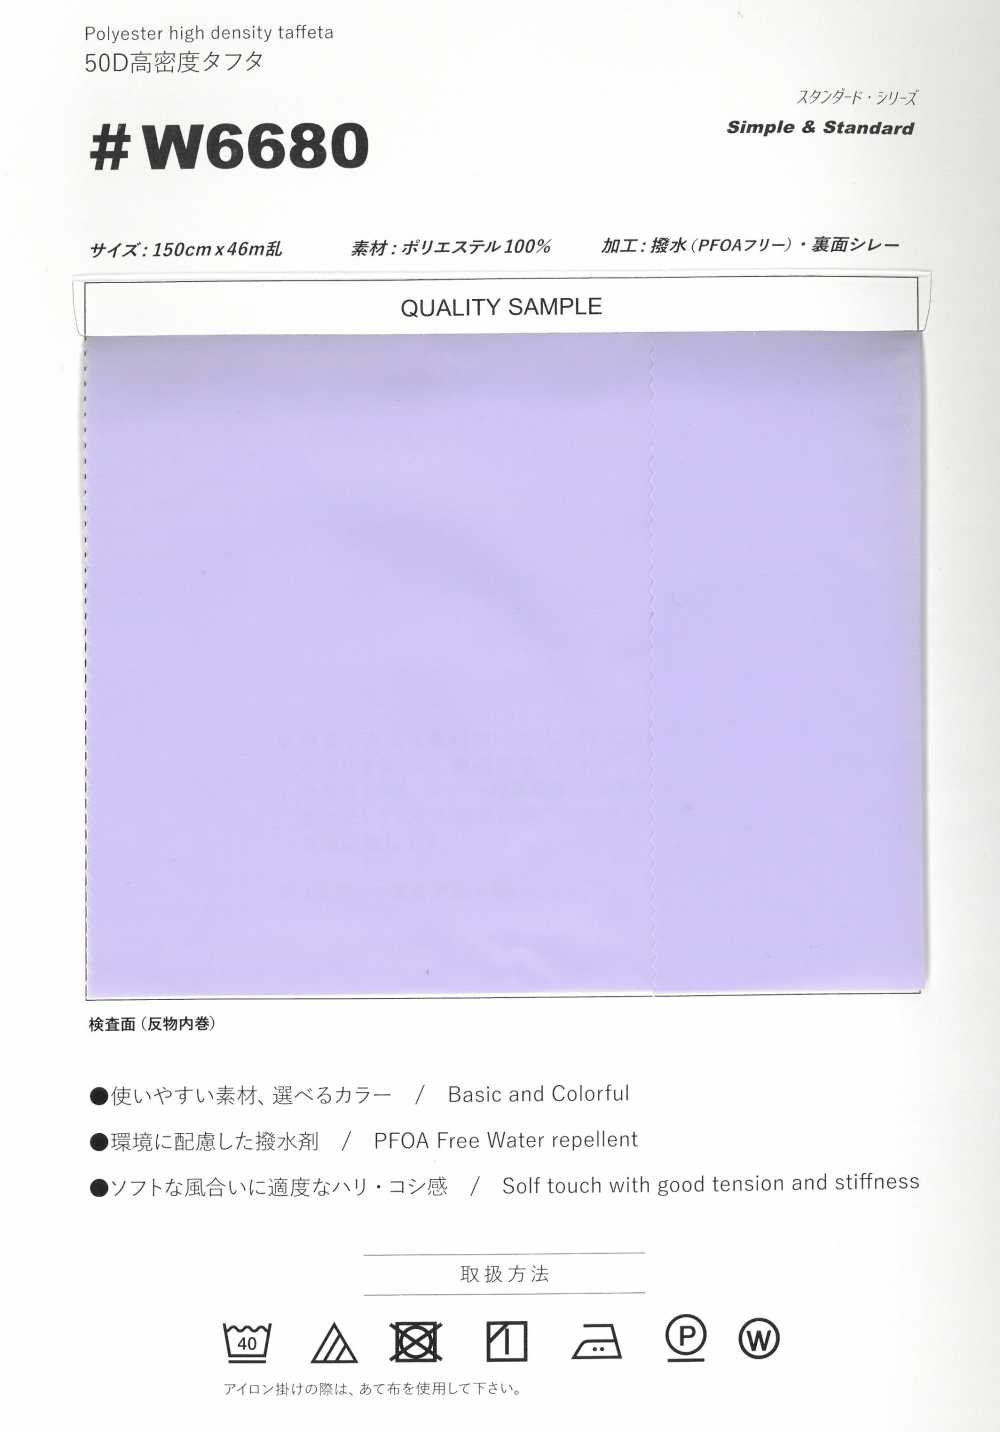 W6680 50D High Density Taft[Textilgewebe] Nishiyama